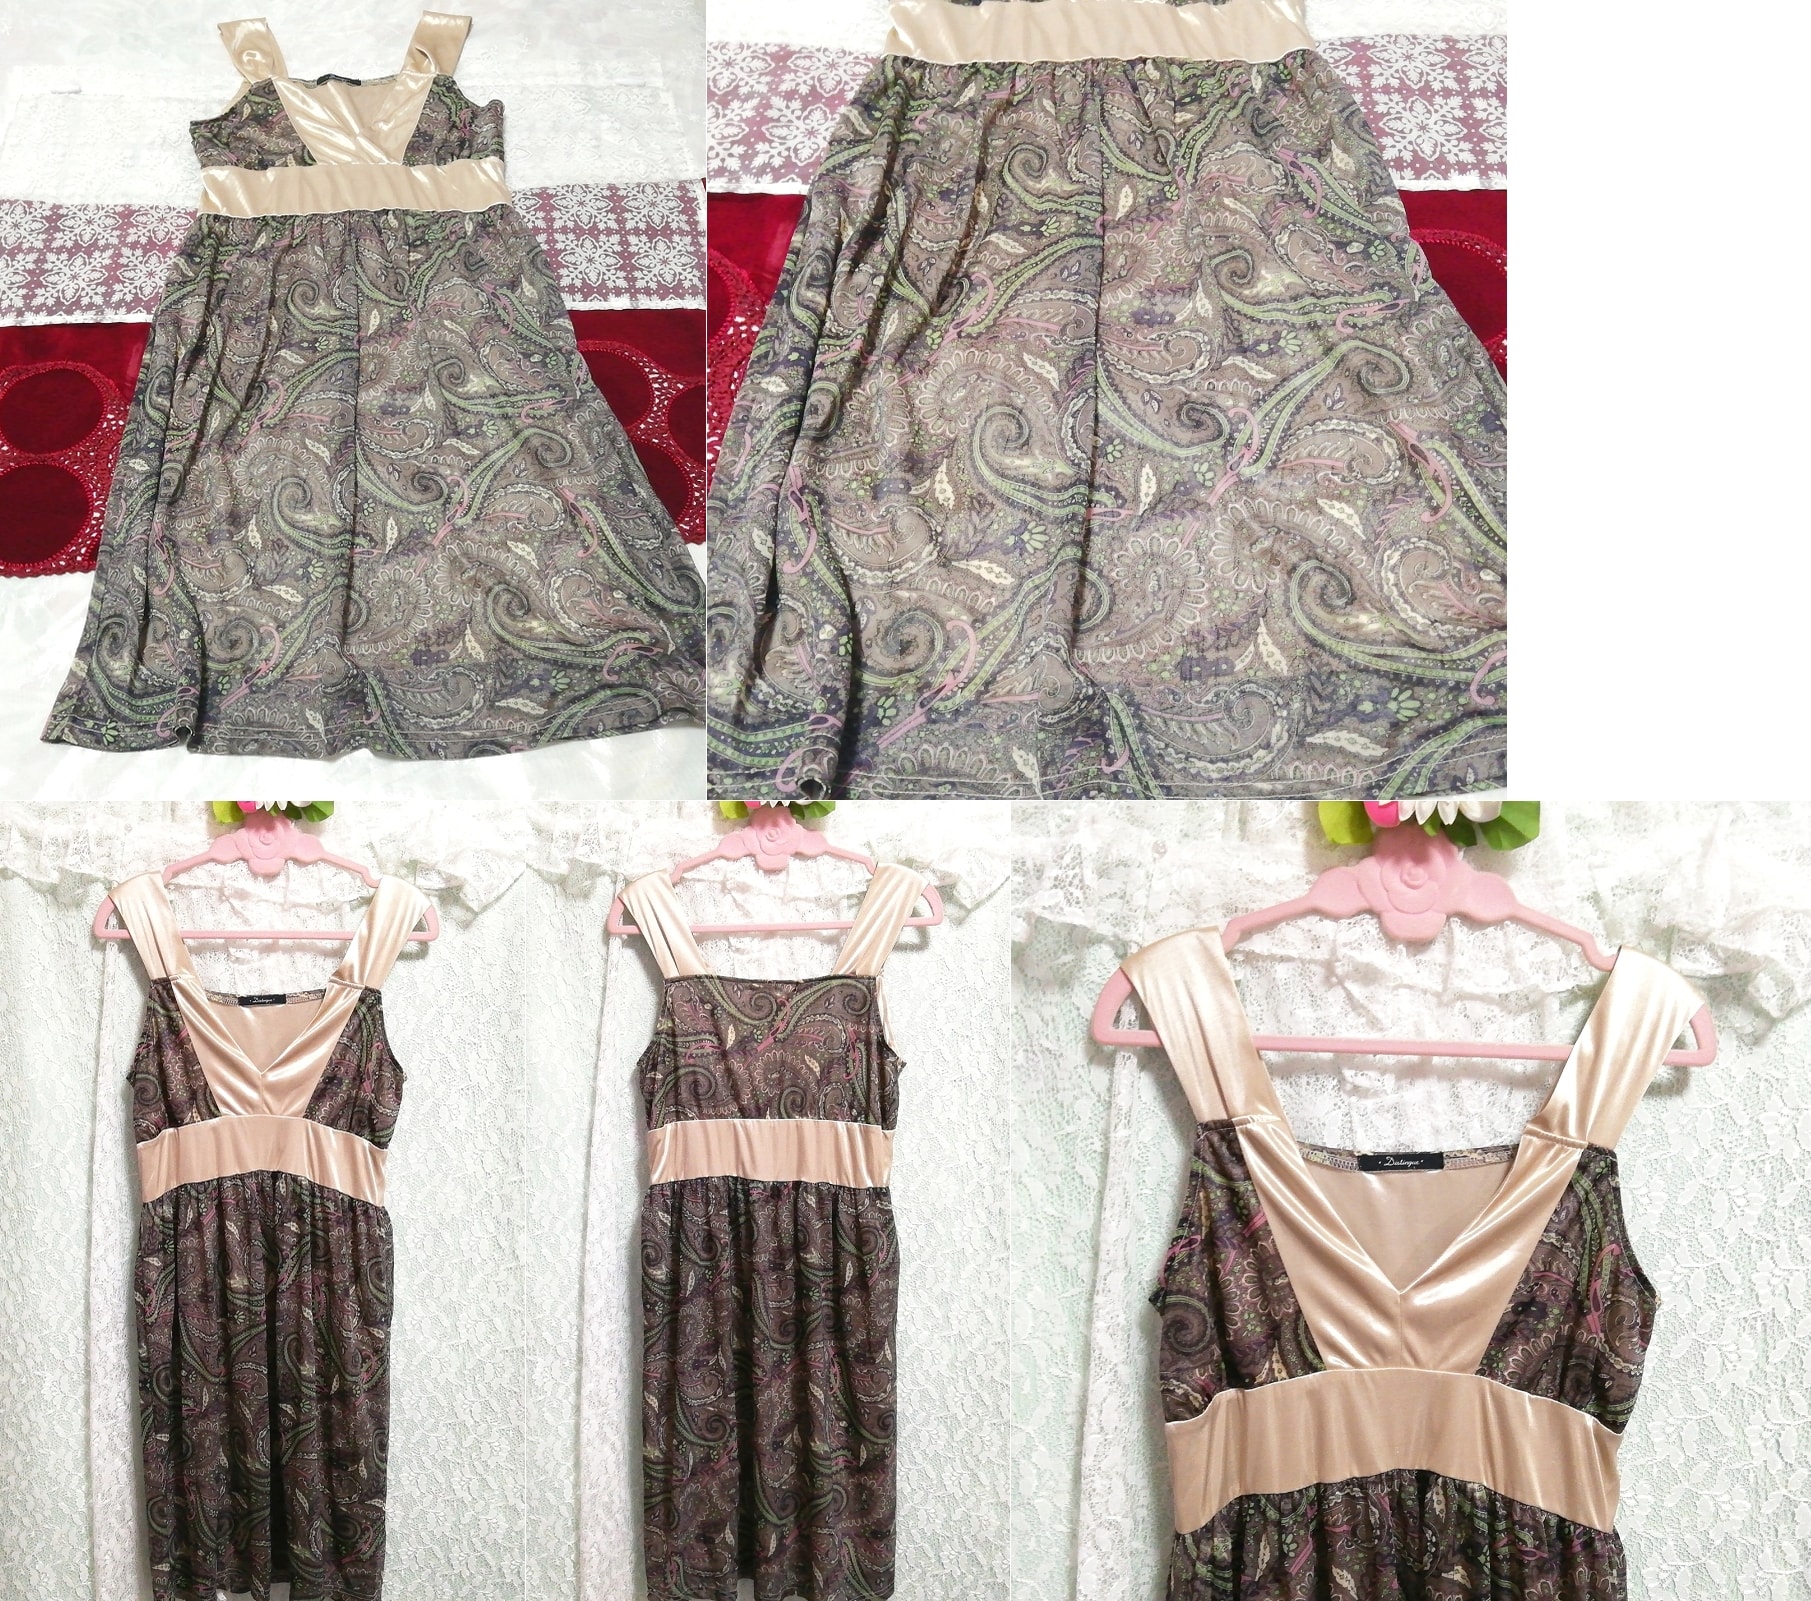 Gray ethnic pattern chiffon sleeveless negligee nightgown half dress, knee length skirt, m size